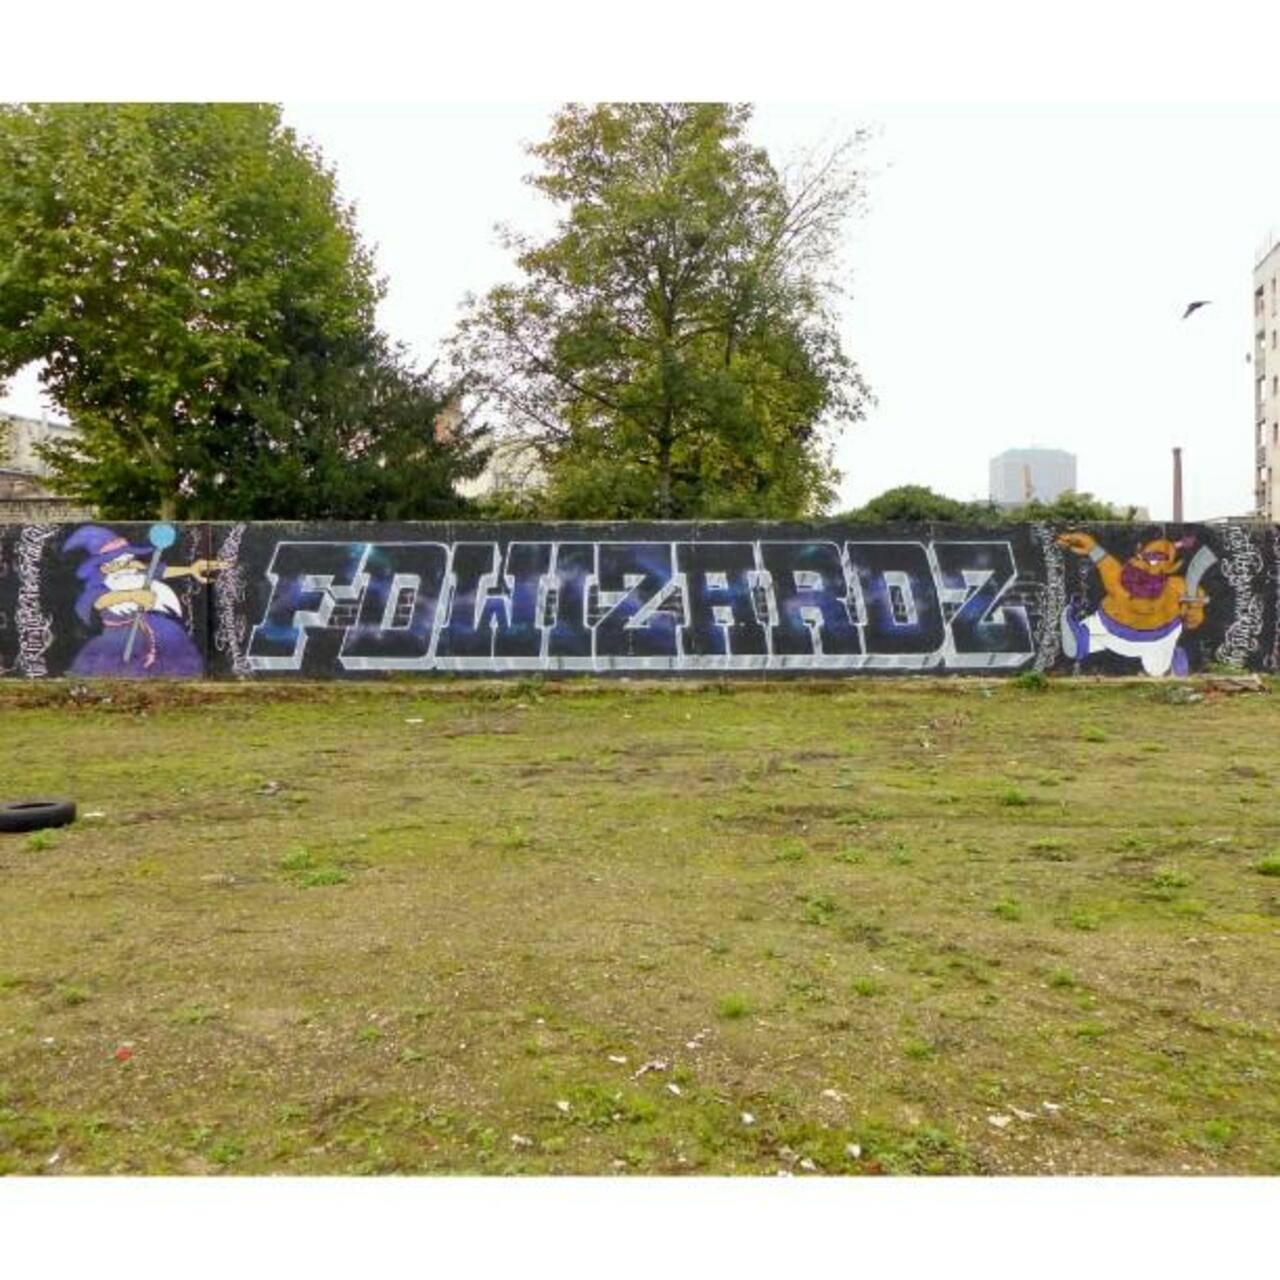 #Paris #graffiti photo by @maxdimontemarciano http://ift.tt/1GmLuuC #StreetArt https://t.co/vtWFFaLQEI